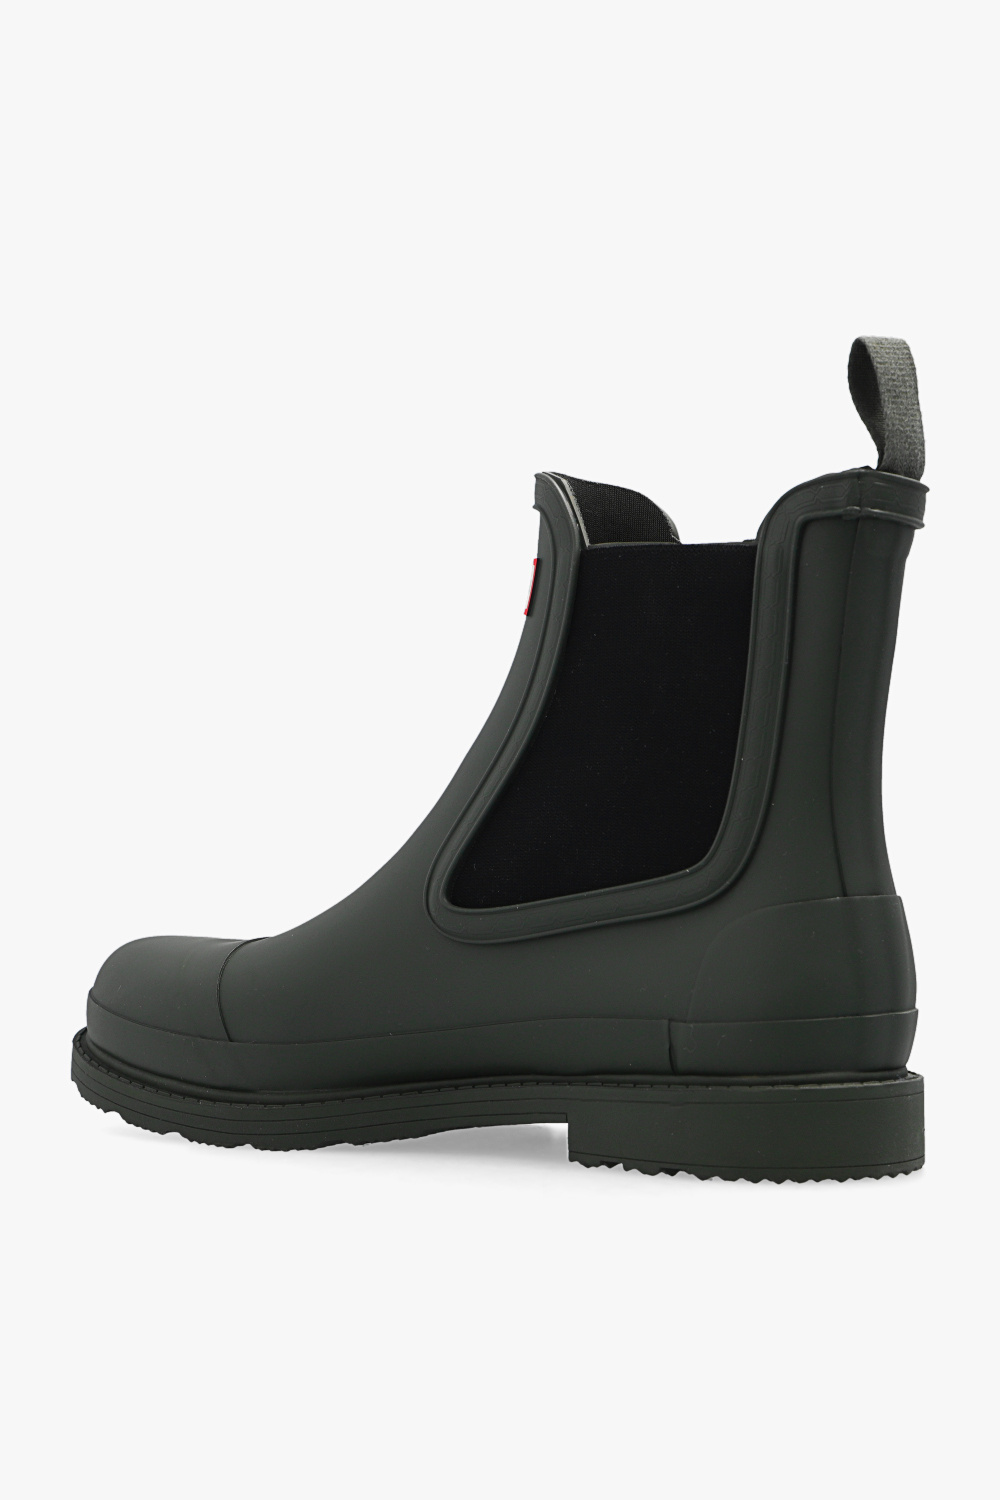 Hunter ‘Commando Chelsea’ rain boots